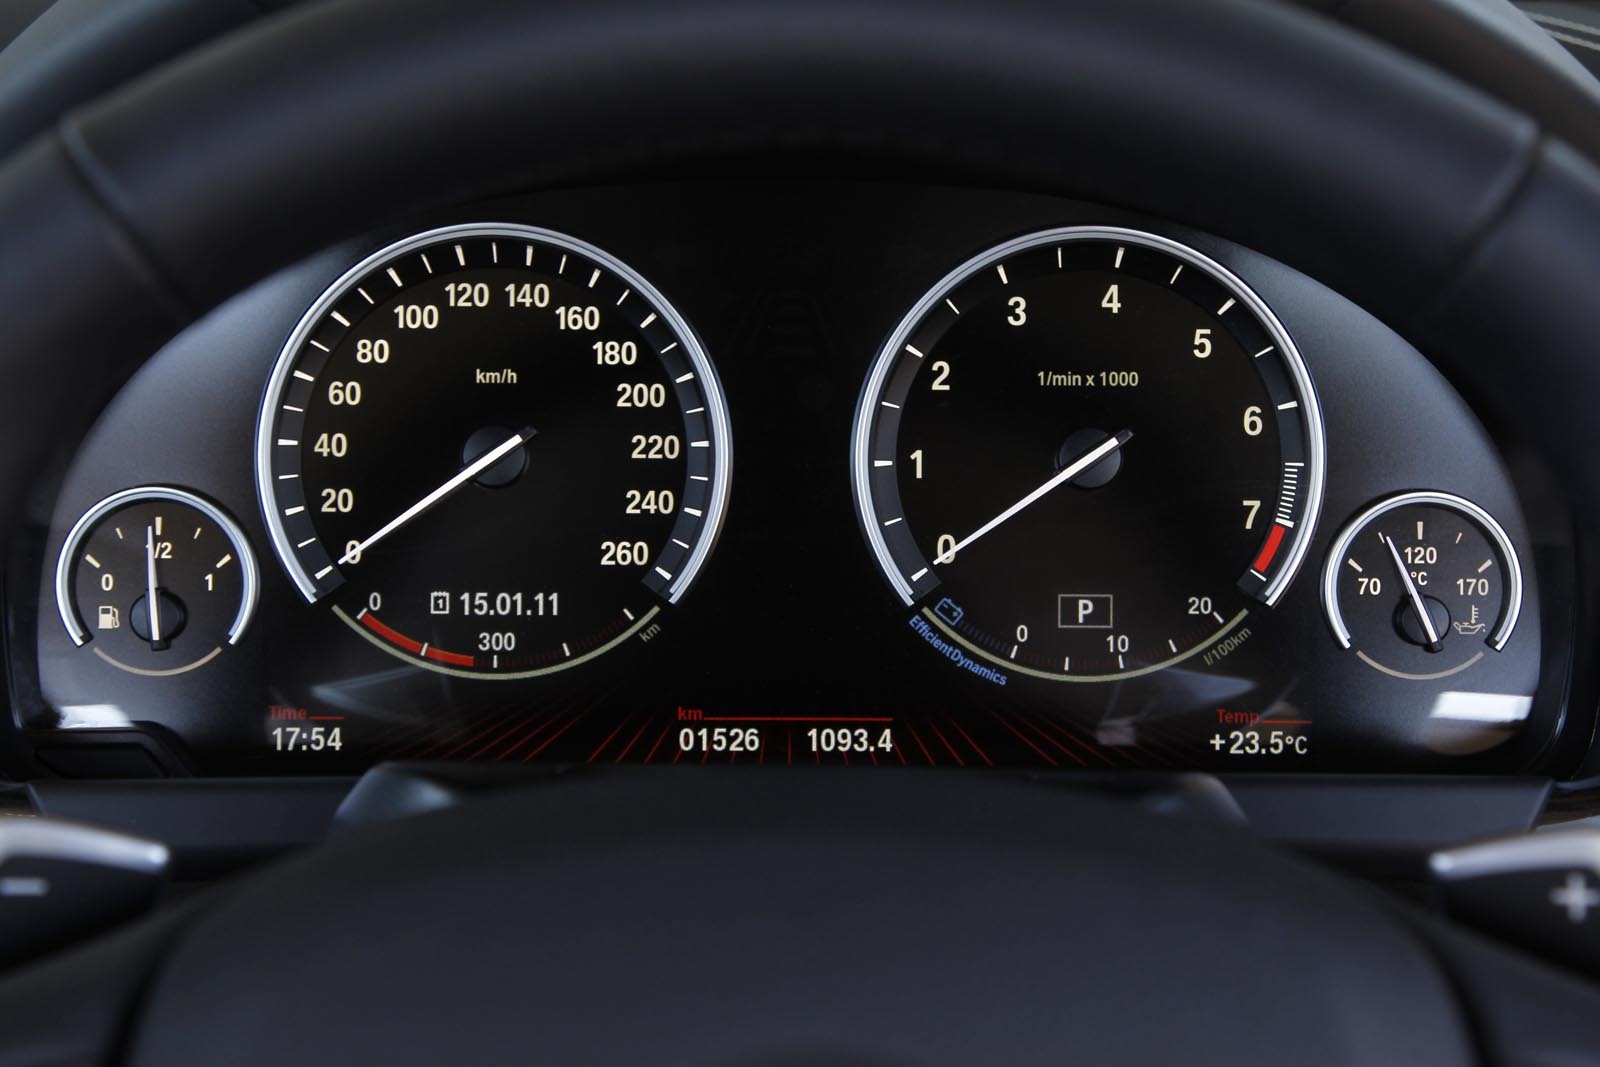 BMW 650i Convertible ajunge la 100 km/h in doar 5 secunde, la o putere de 407 CP